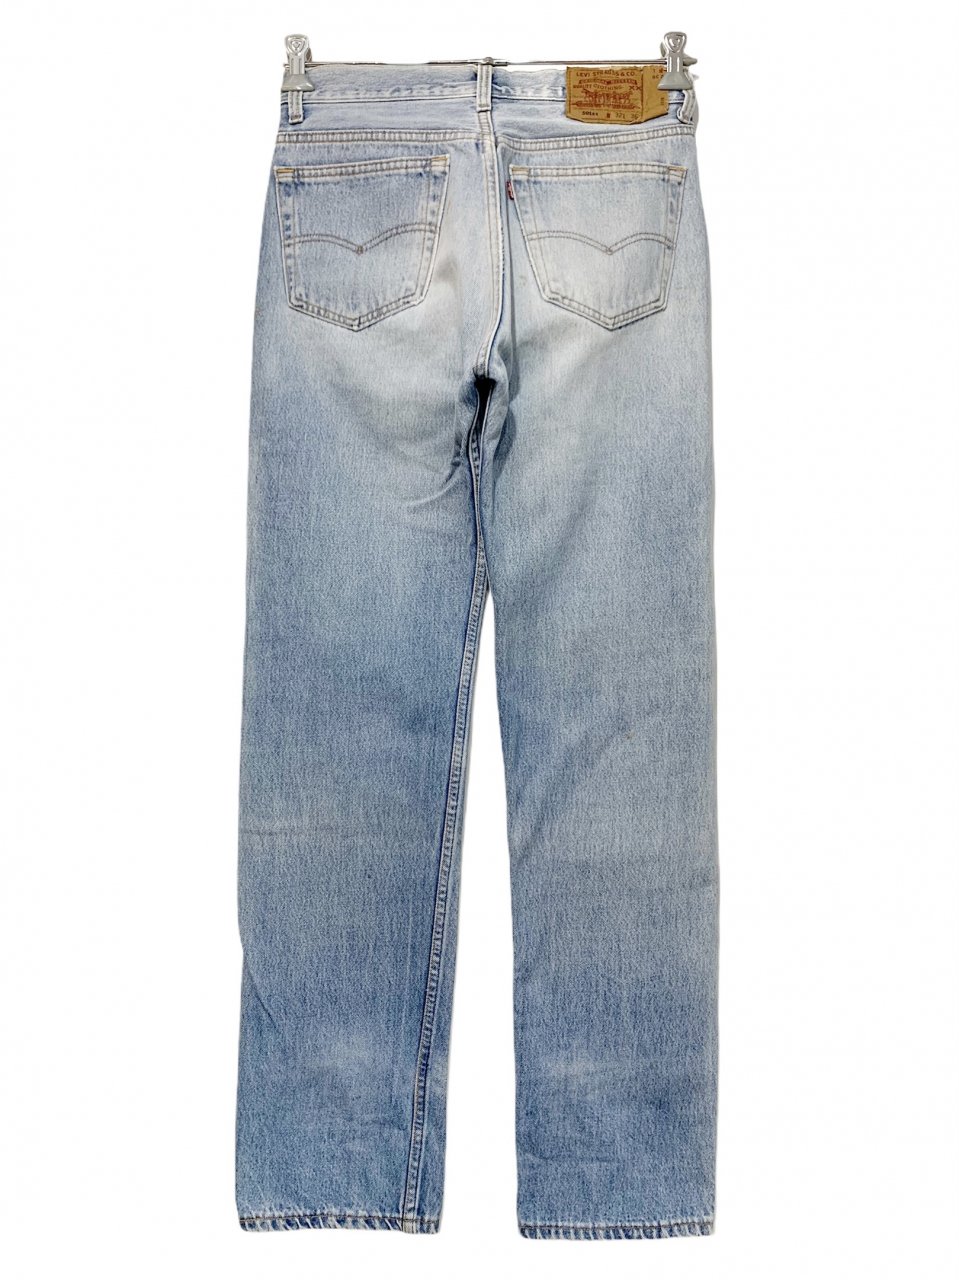 USA製 90s Levi's 501 Denim Pants 薄青 W30×L32 リーバイス Levis